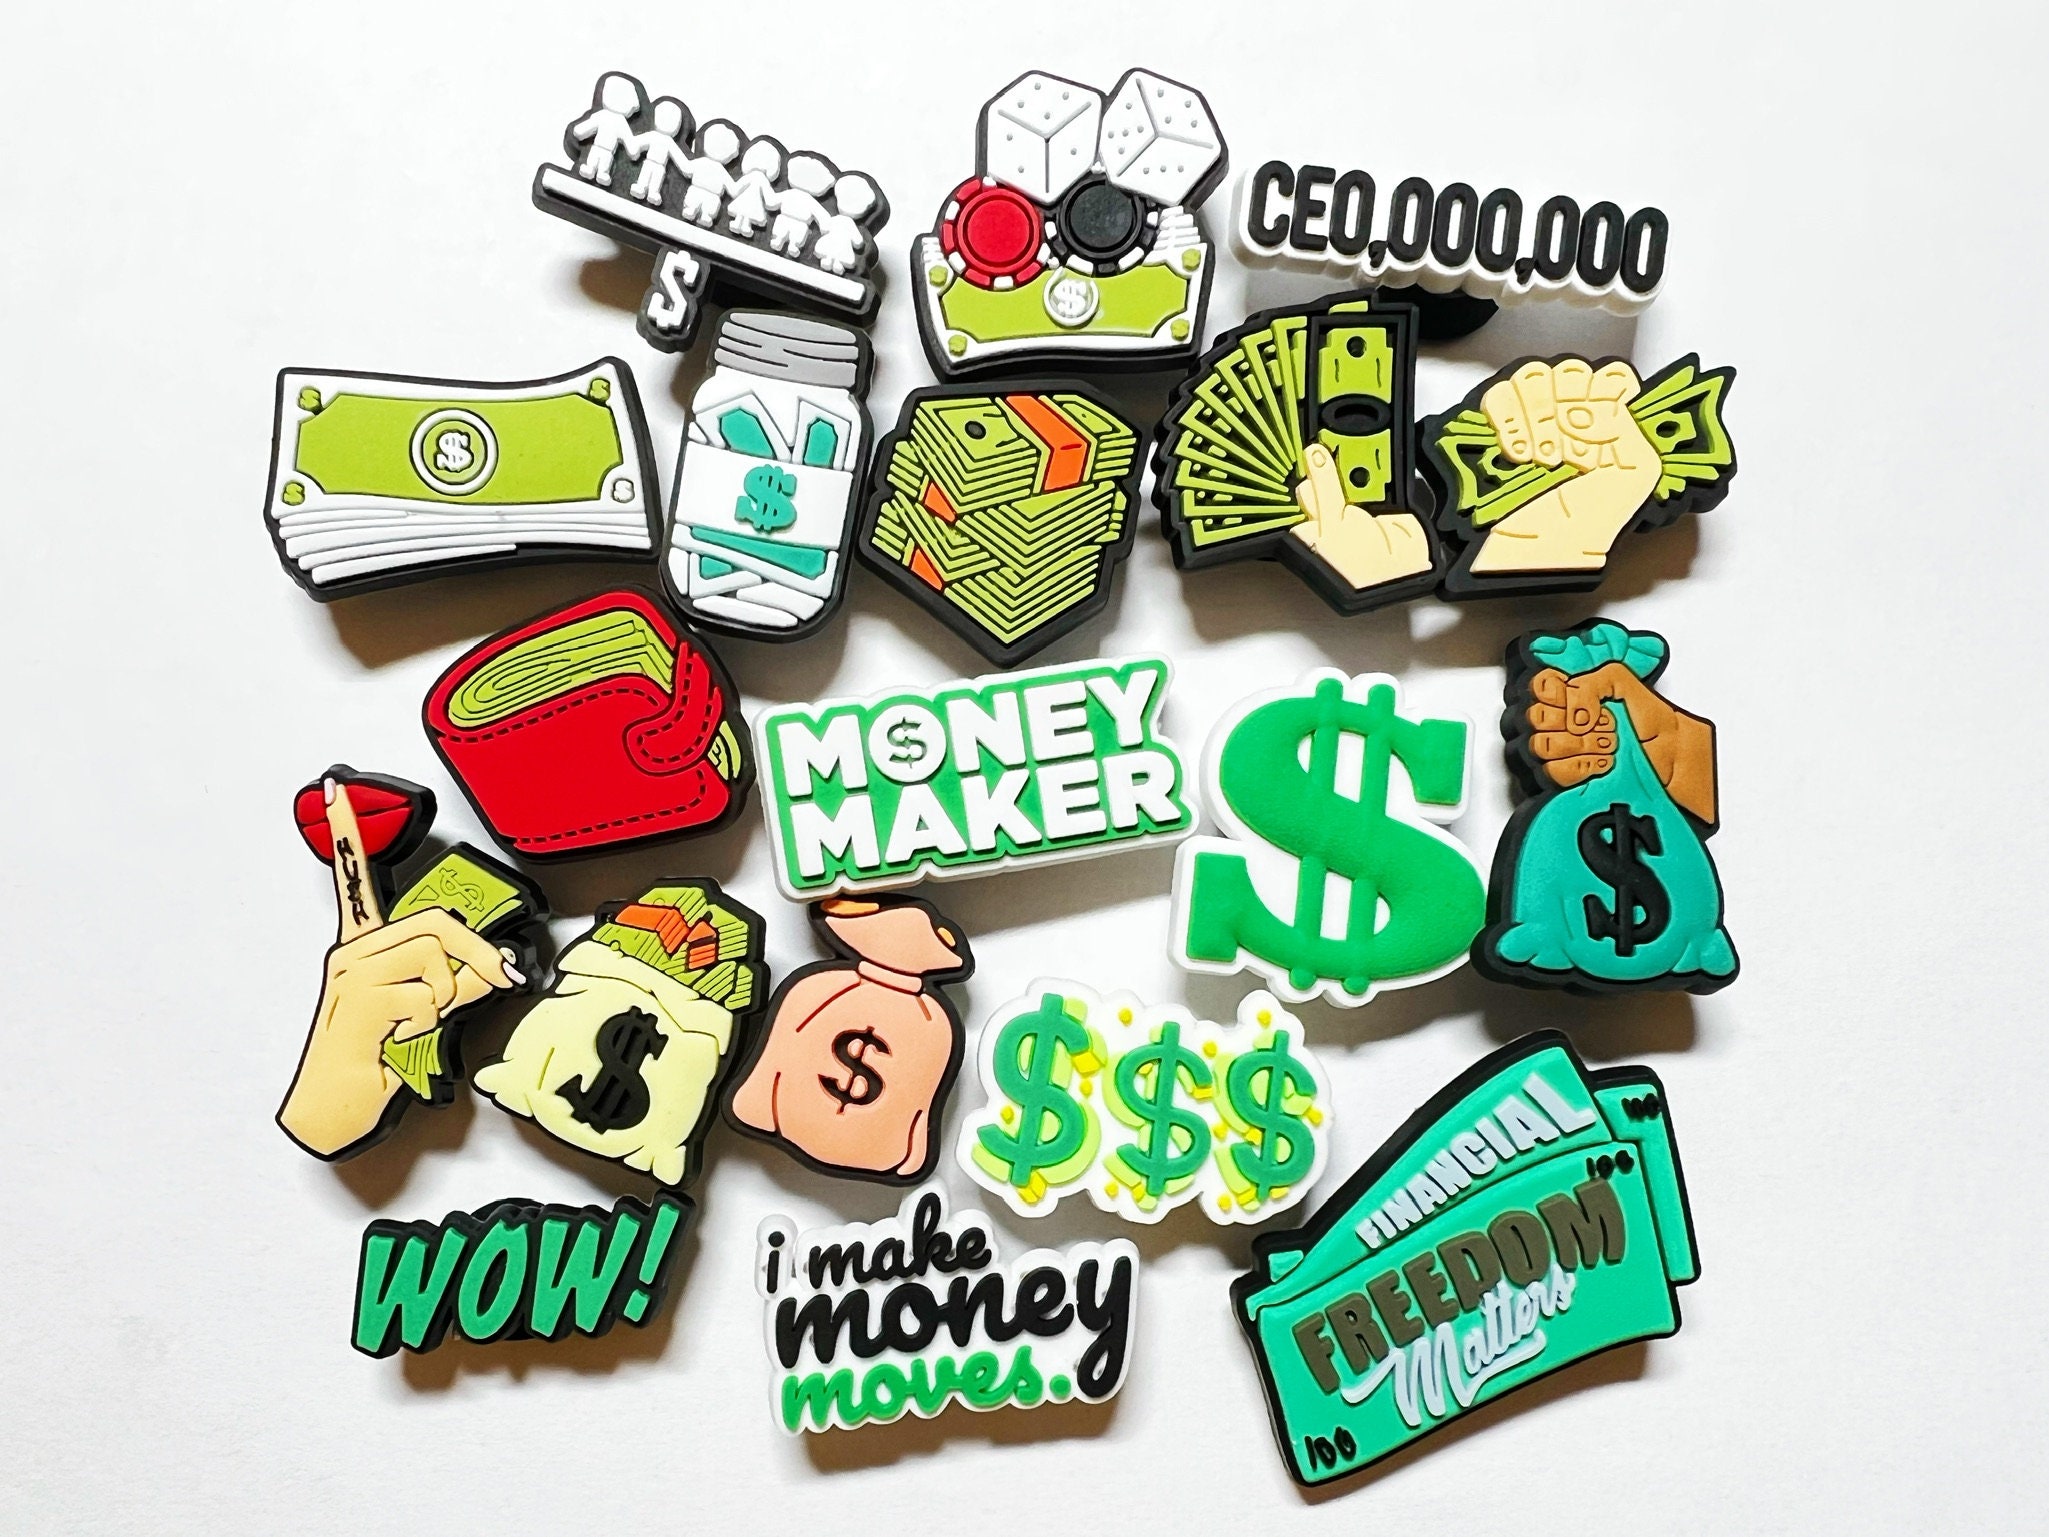 6x MONEY Stickers Die Cut SMALL Stacks Rolls Labels Decals 